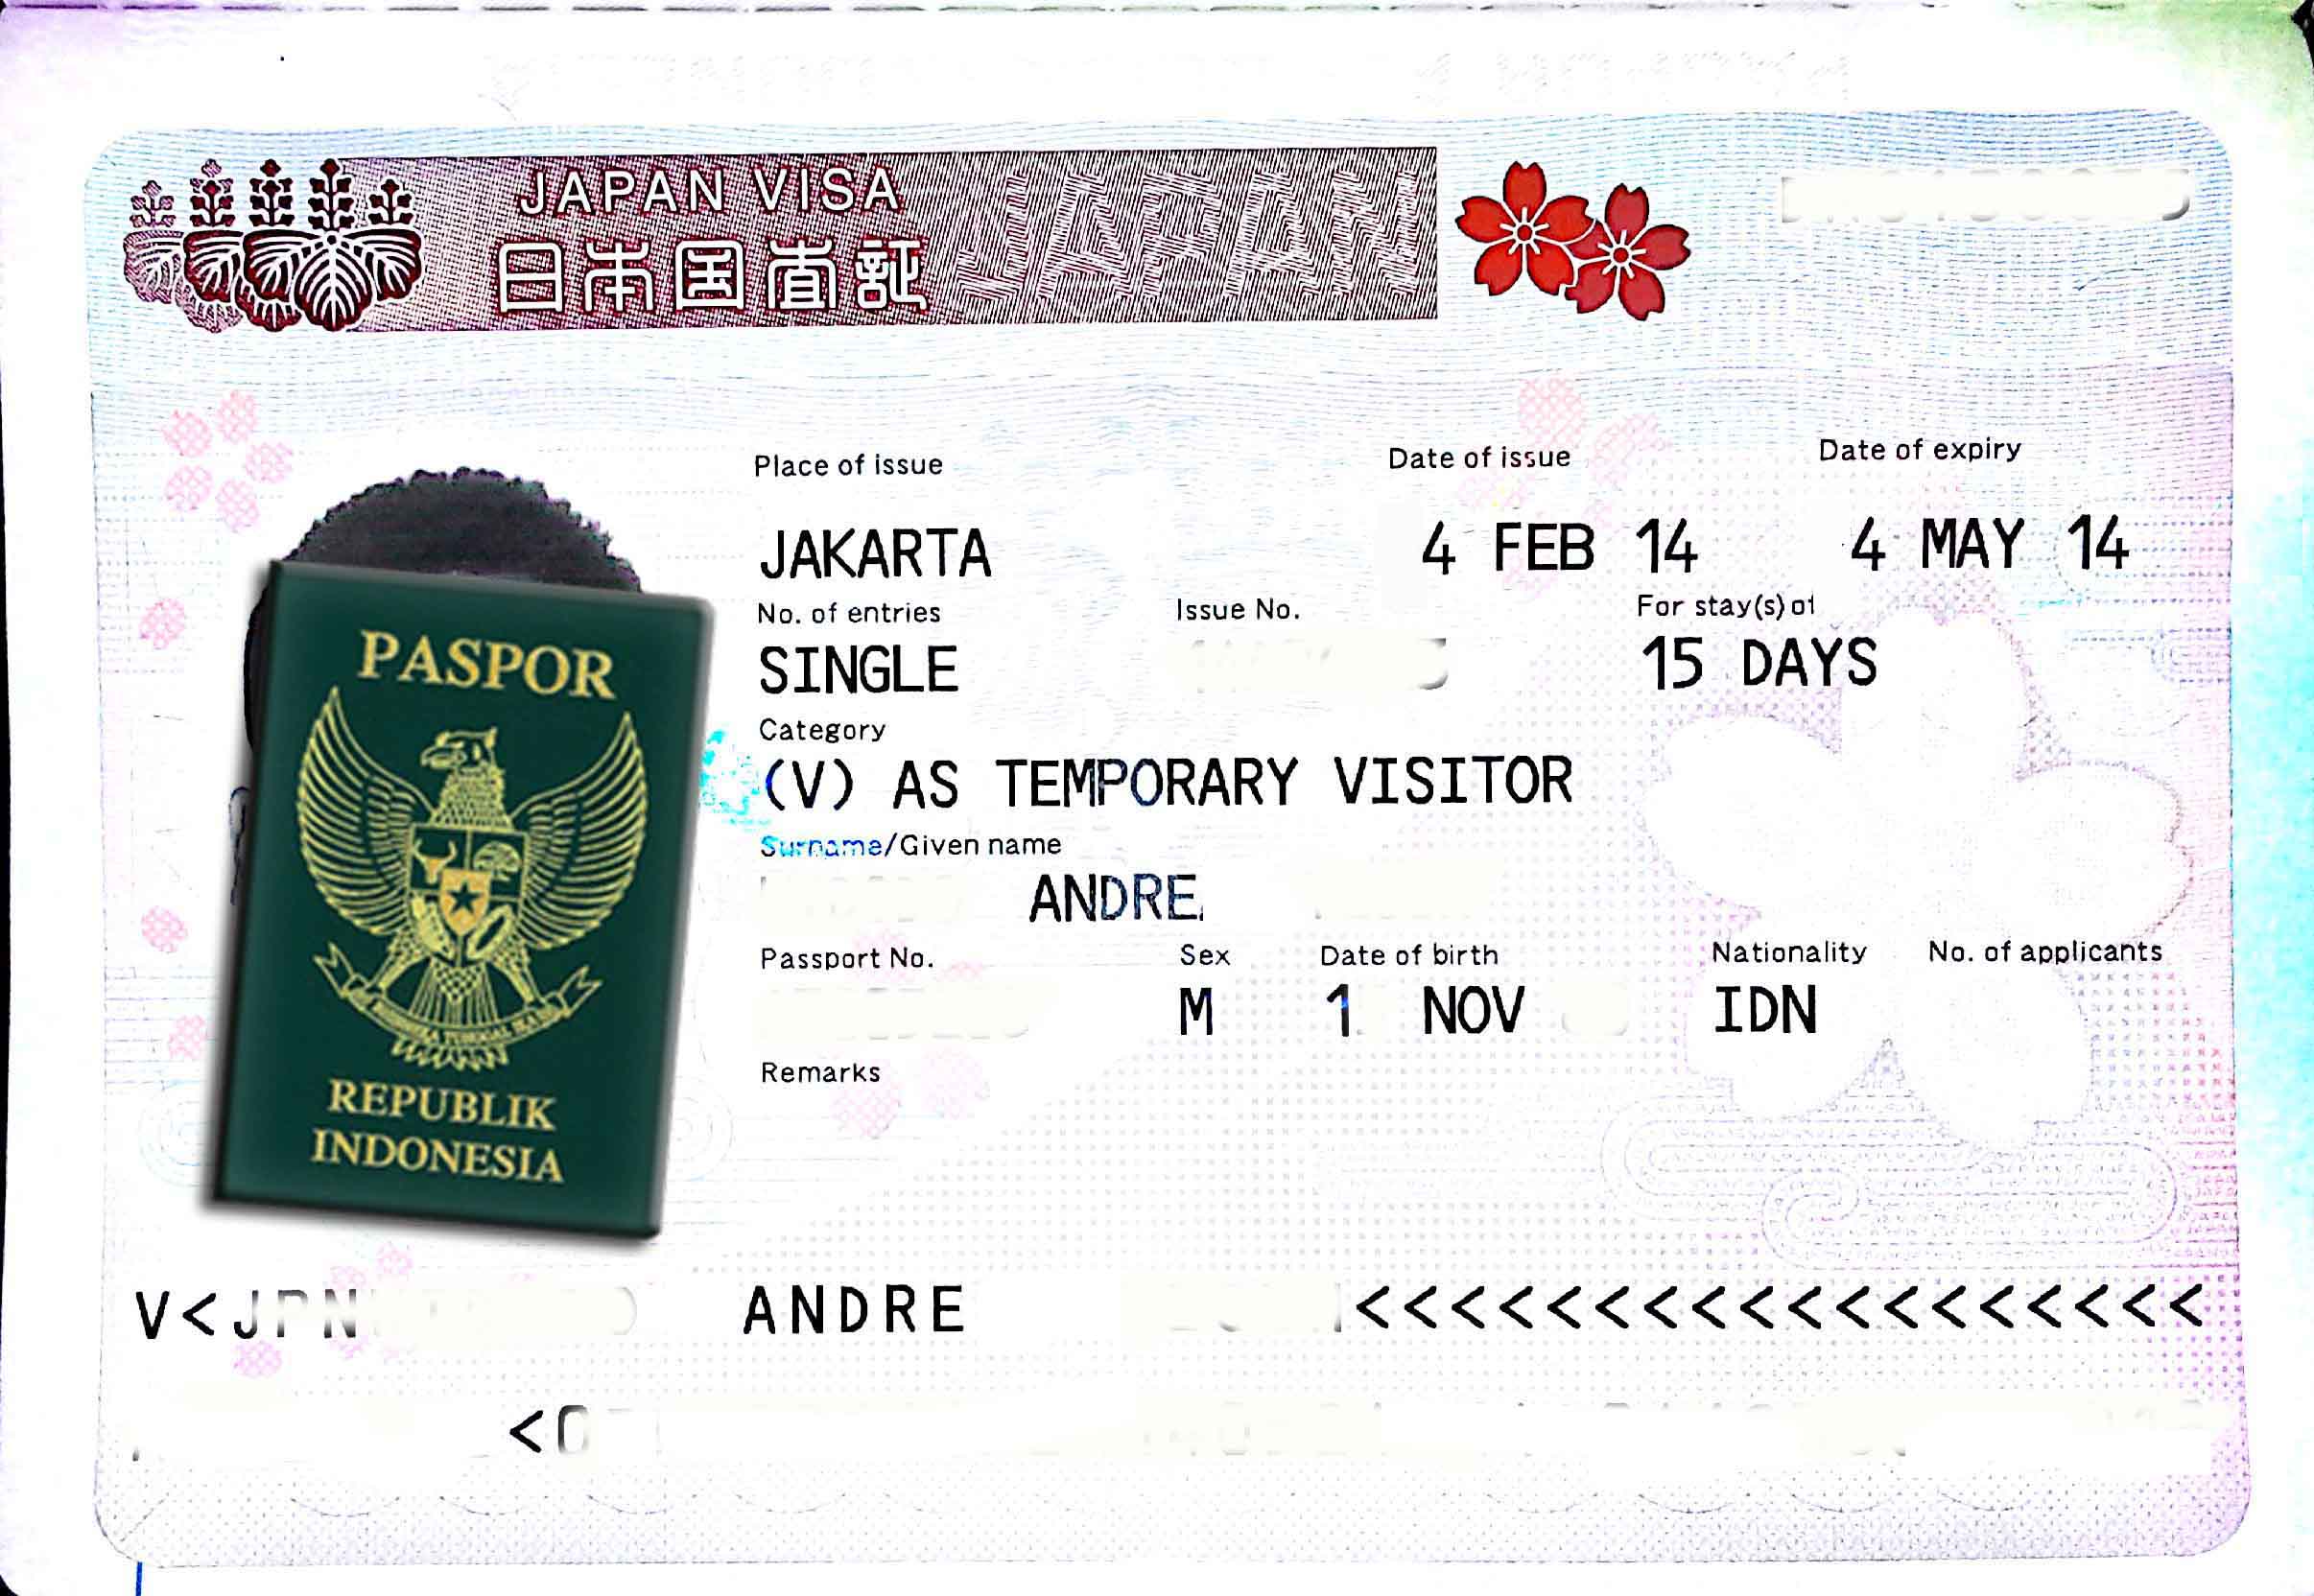 Passport issued